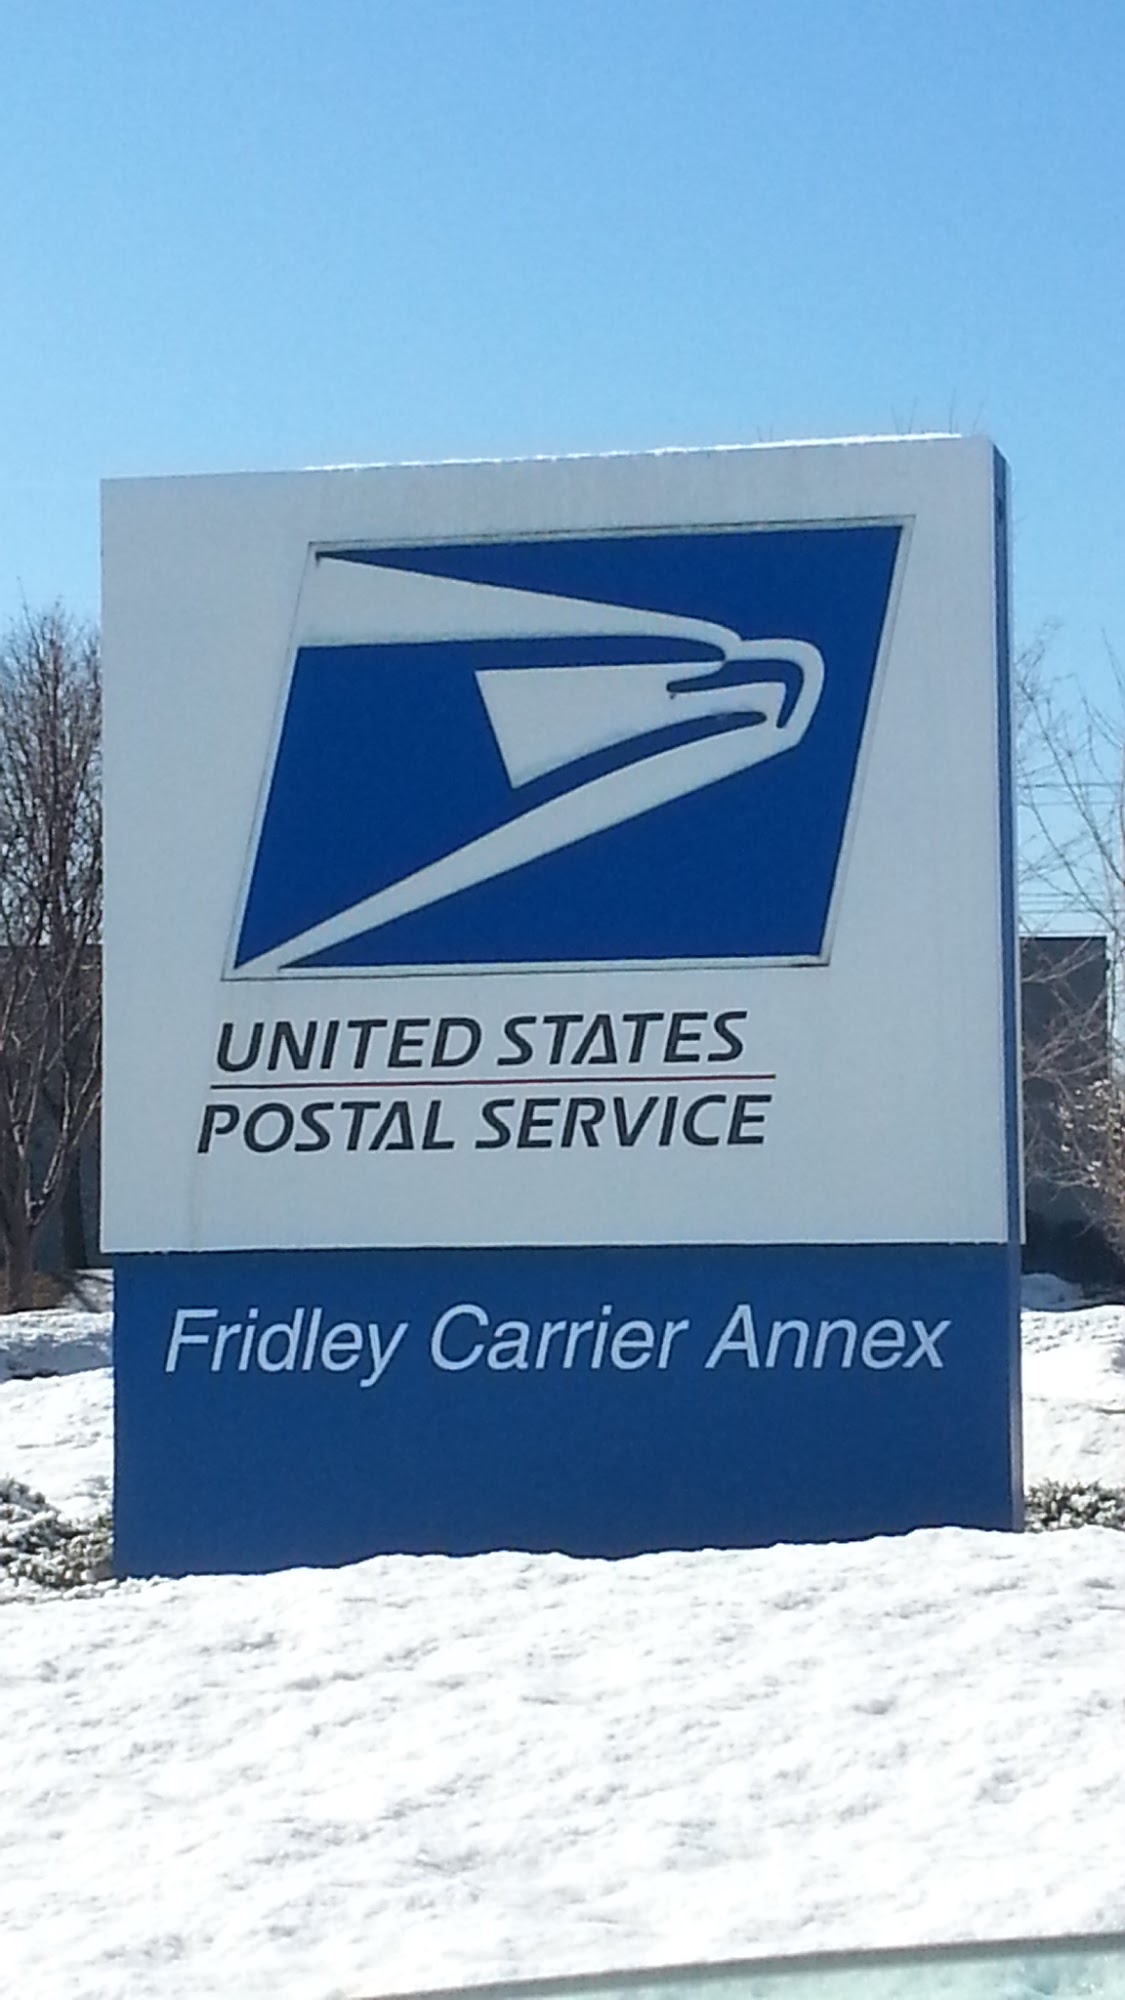 FRIDLEY CARRIER ANNEX — Post Office